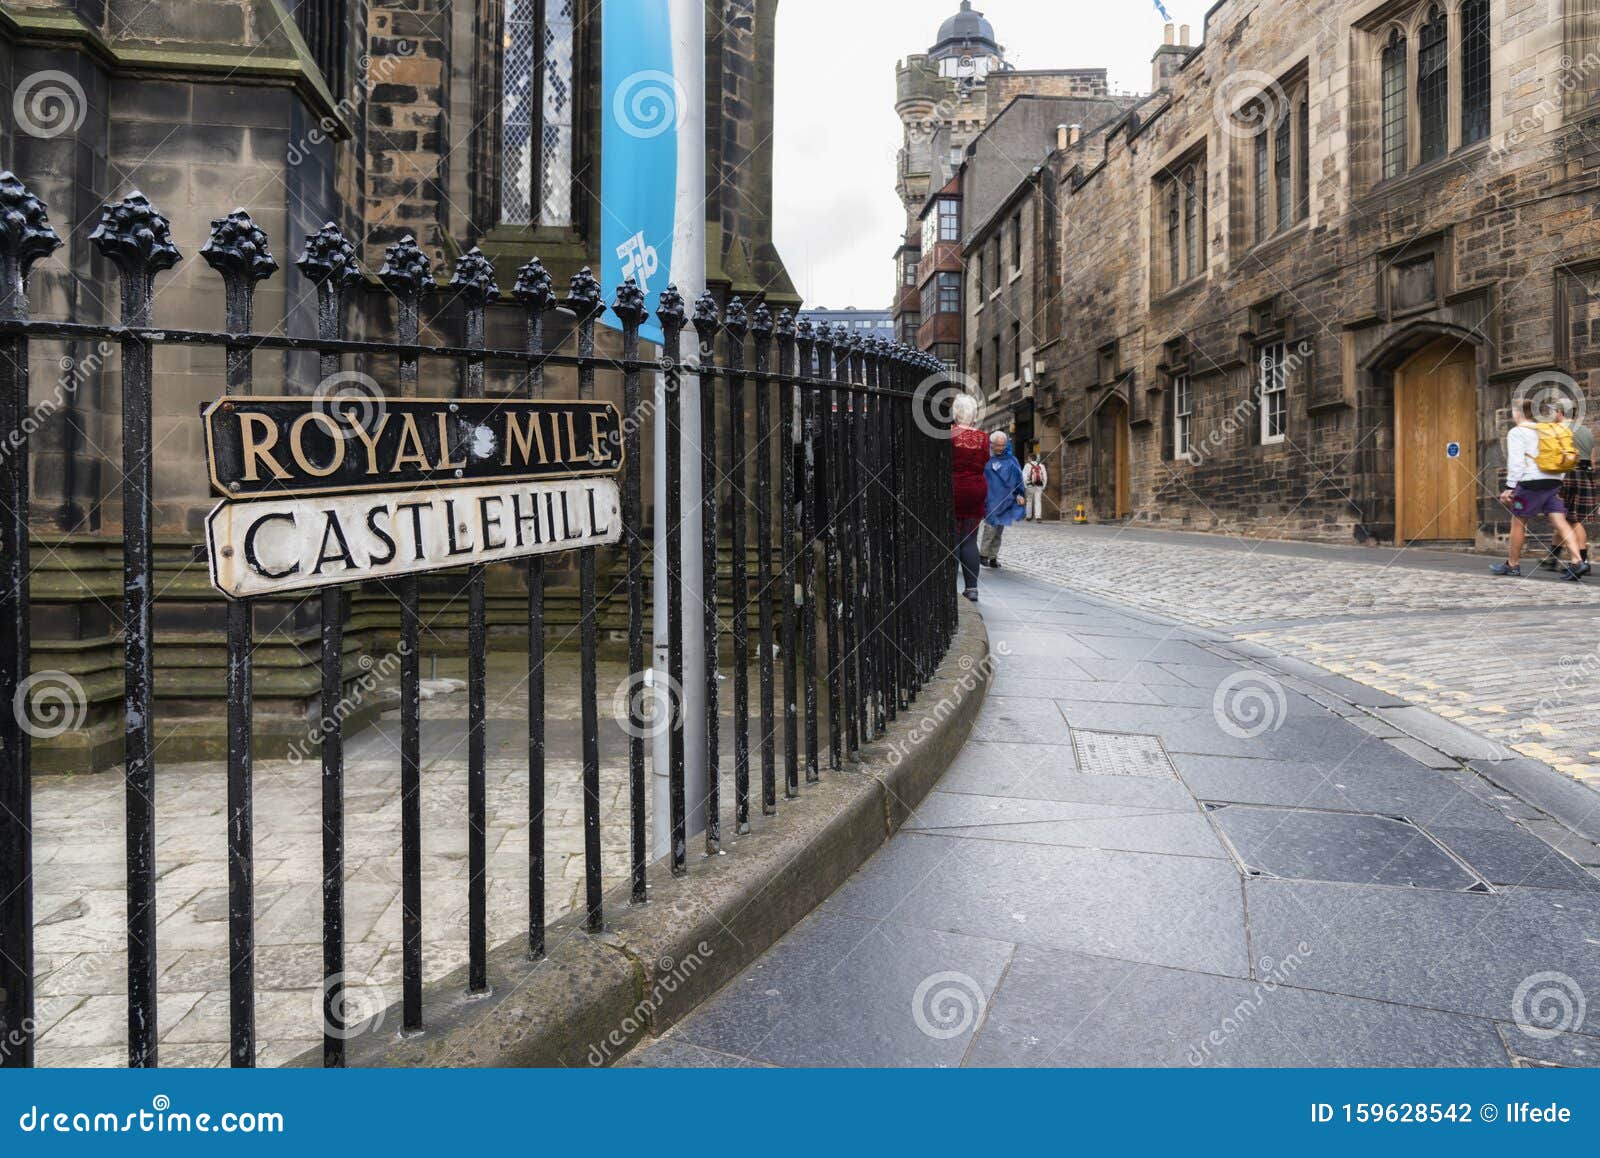 the royal mile on castle hill in edinburgh, scotland